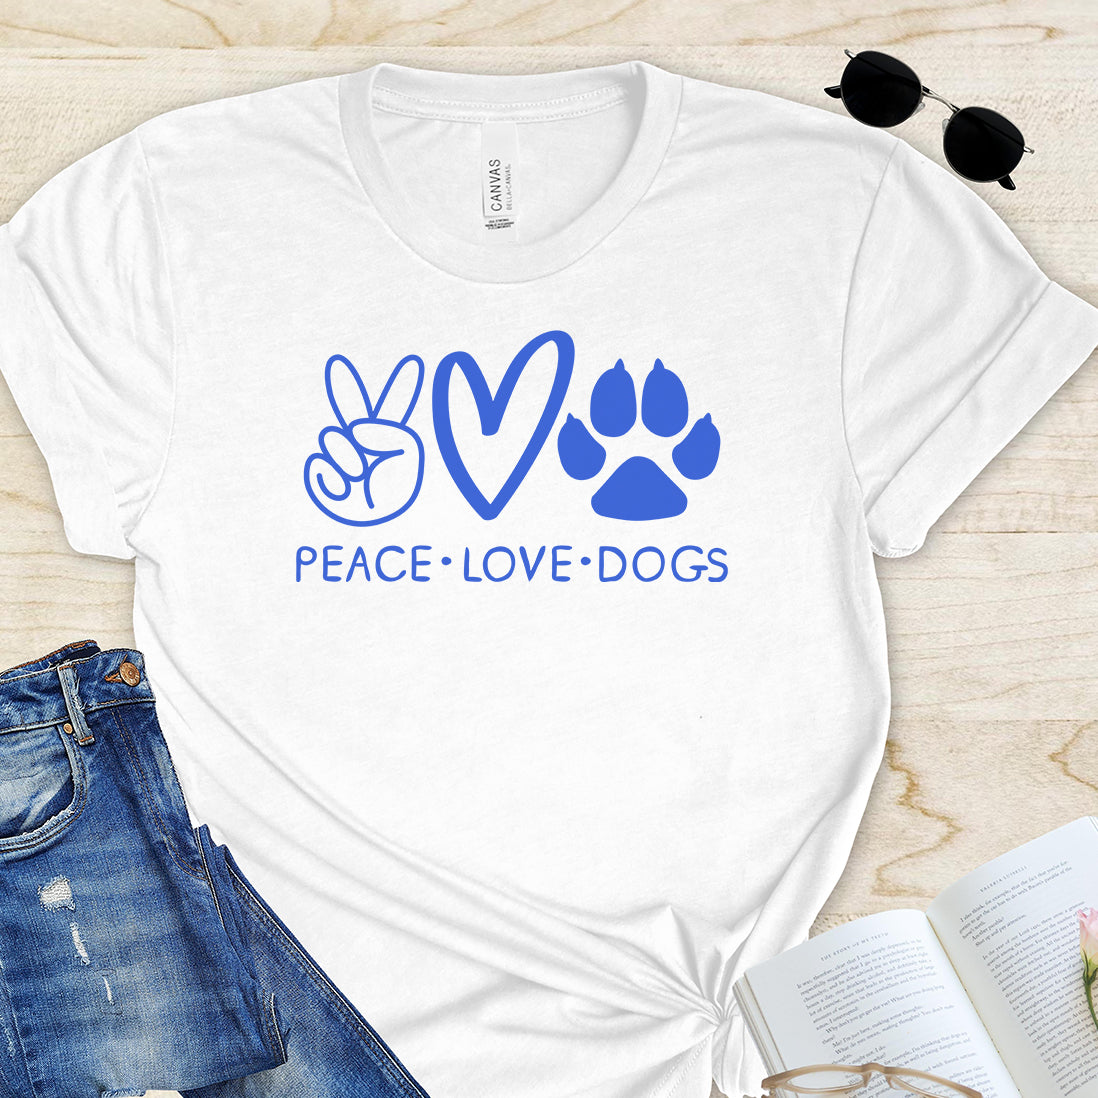 "PEACE - LOVE- DOGS" Enough Said!